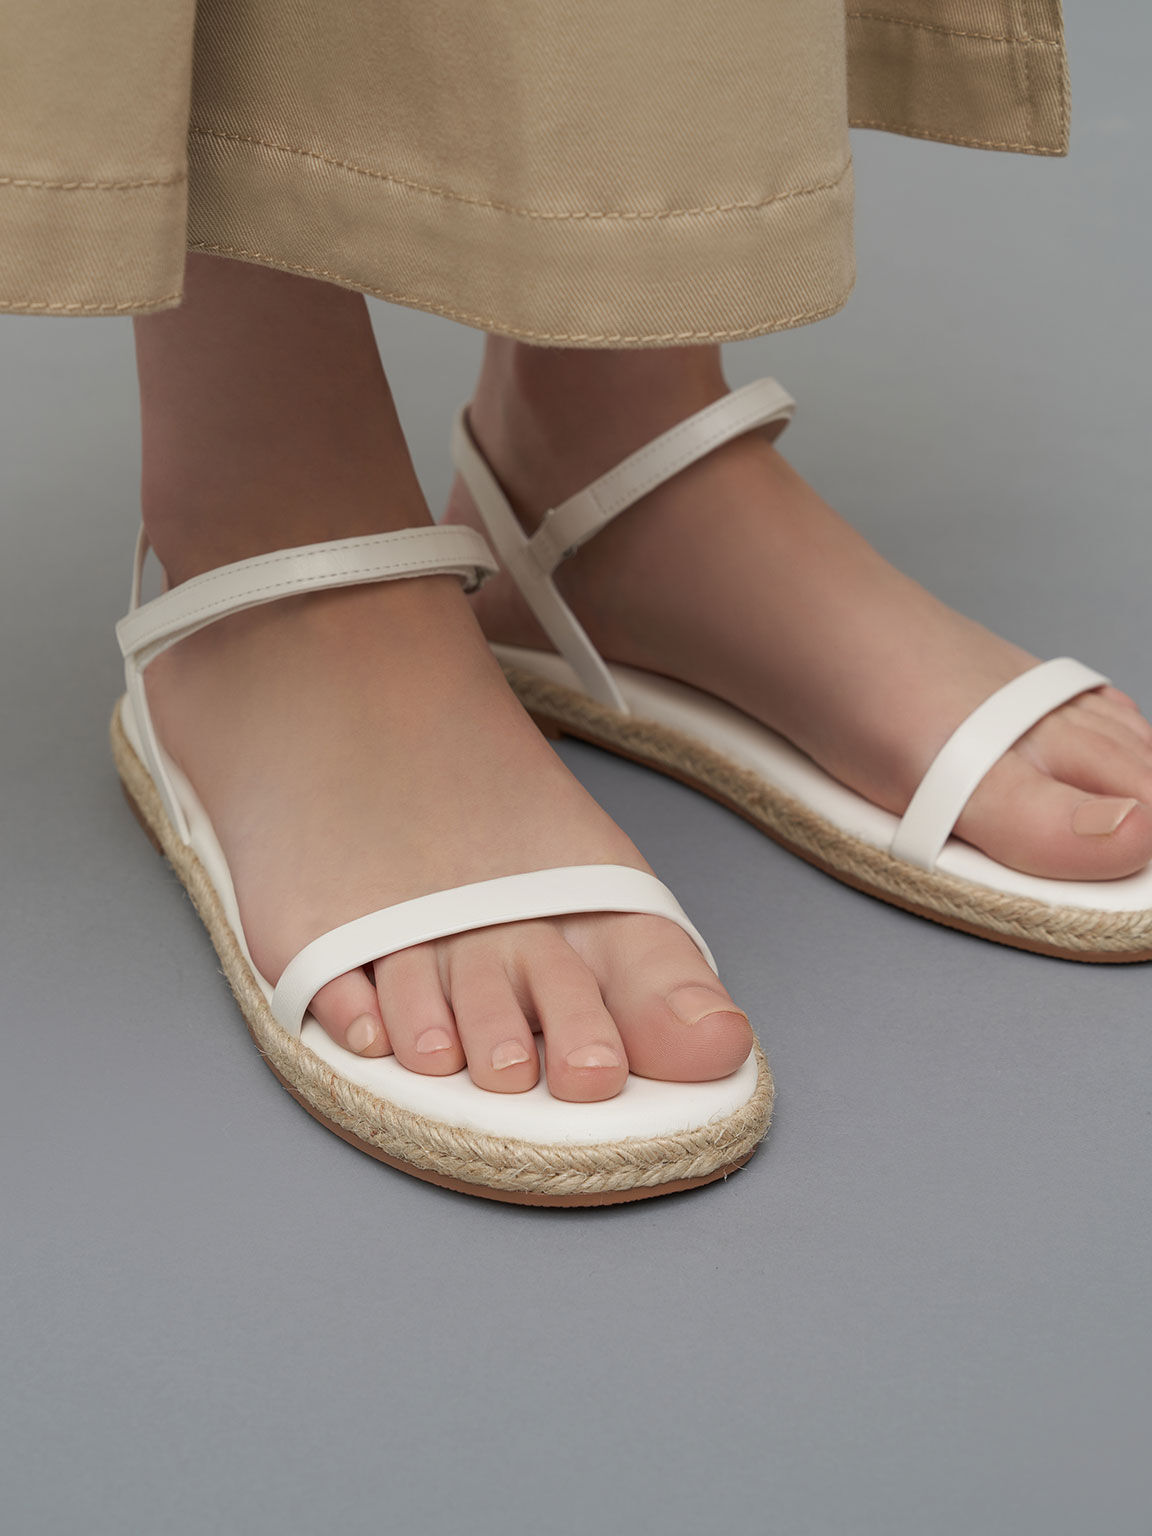 Ankle-Strap Flat Espadrille Sandals, White, hi-res